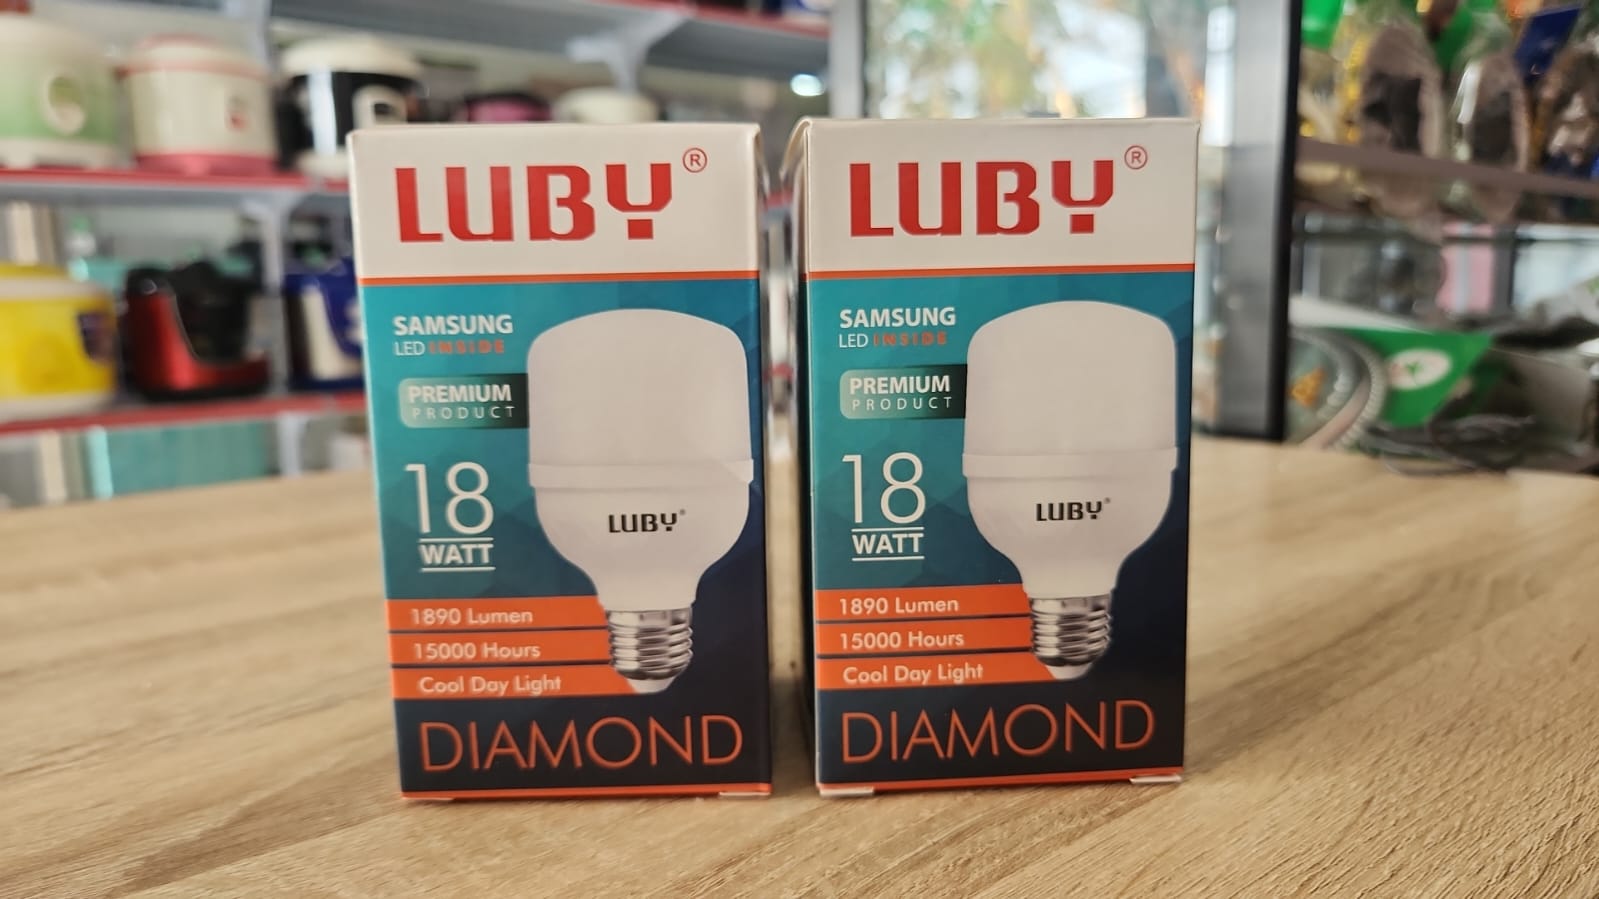 LAMPU LUBY DIAMOND 18 W